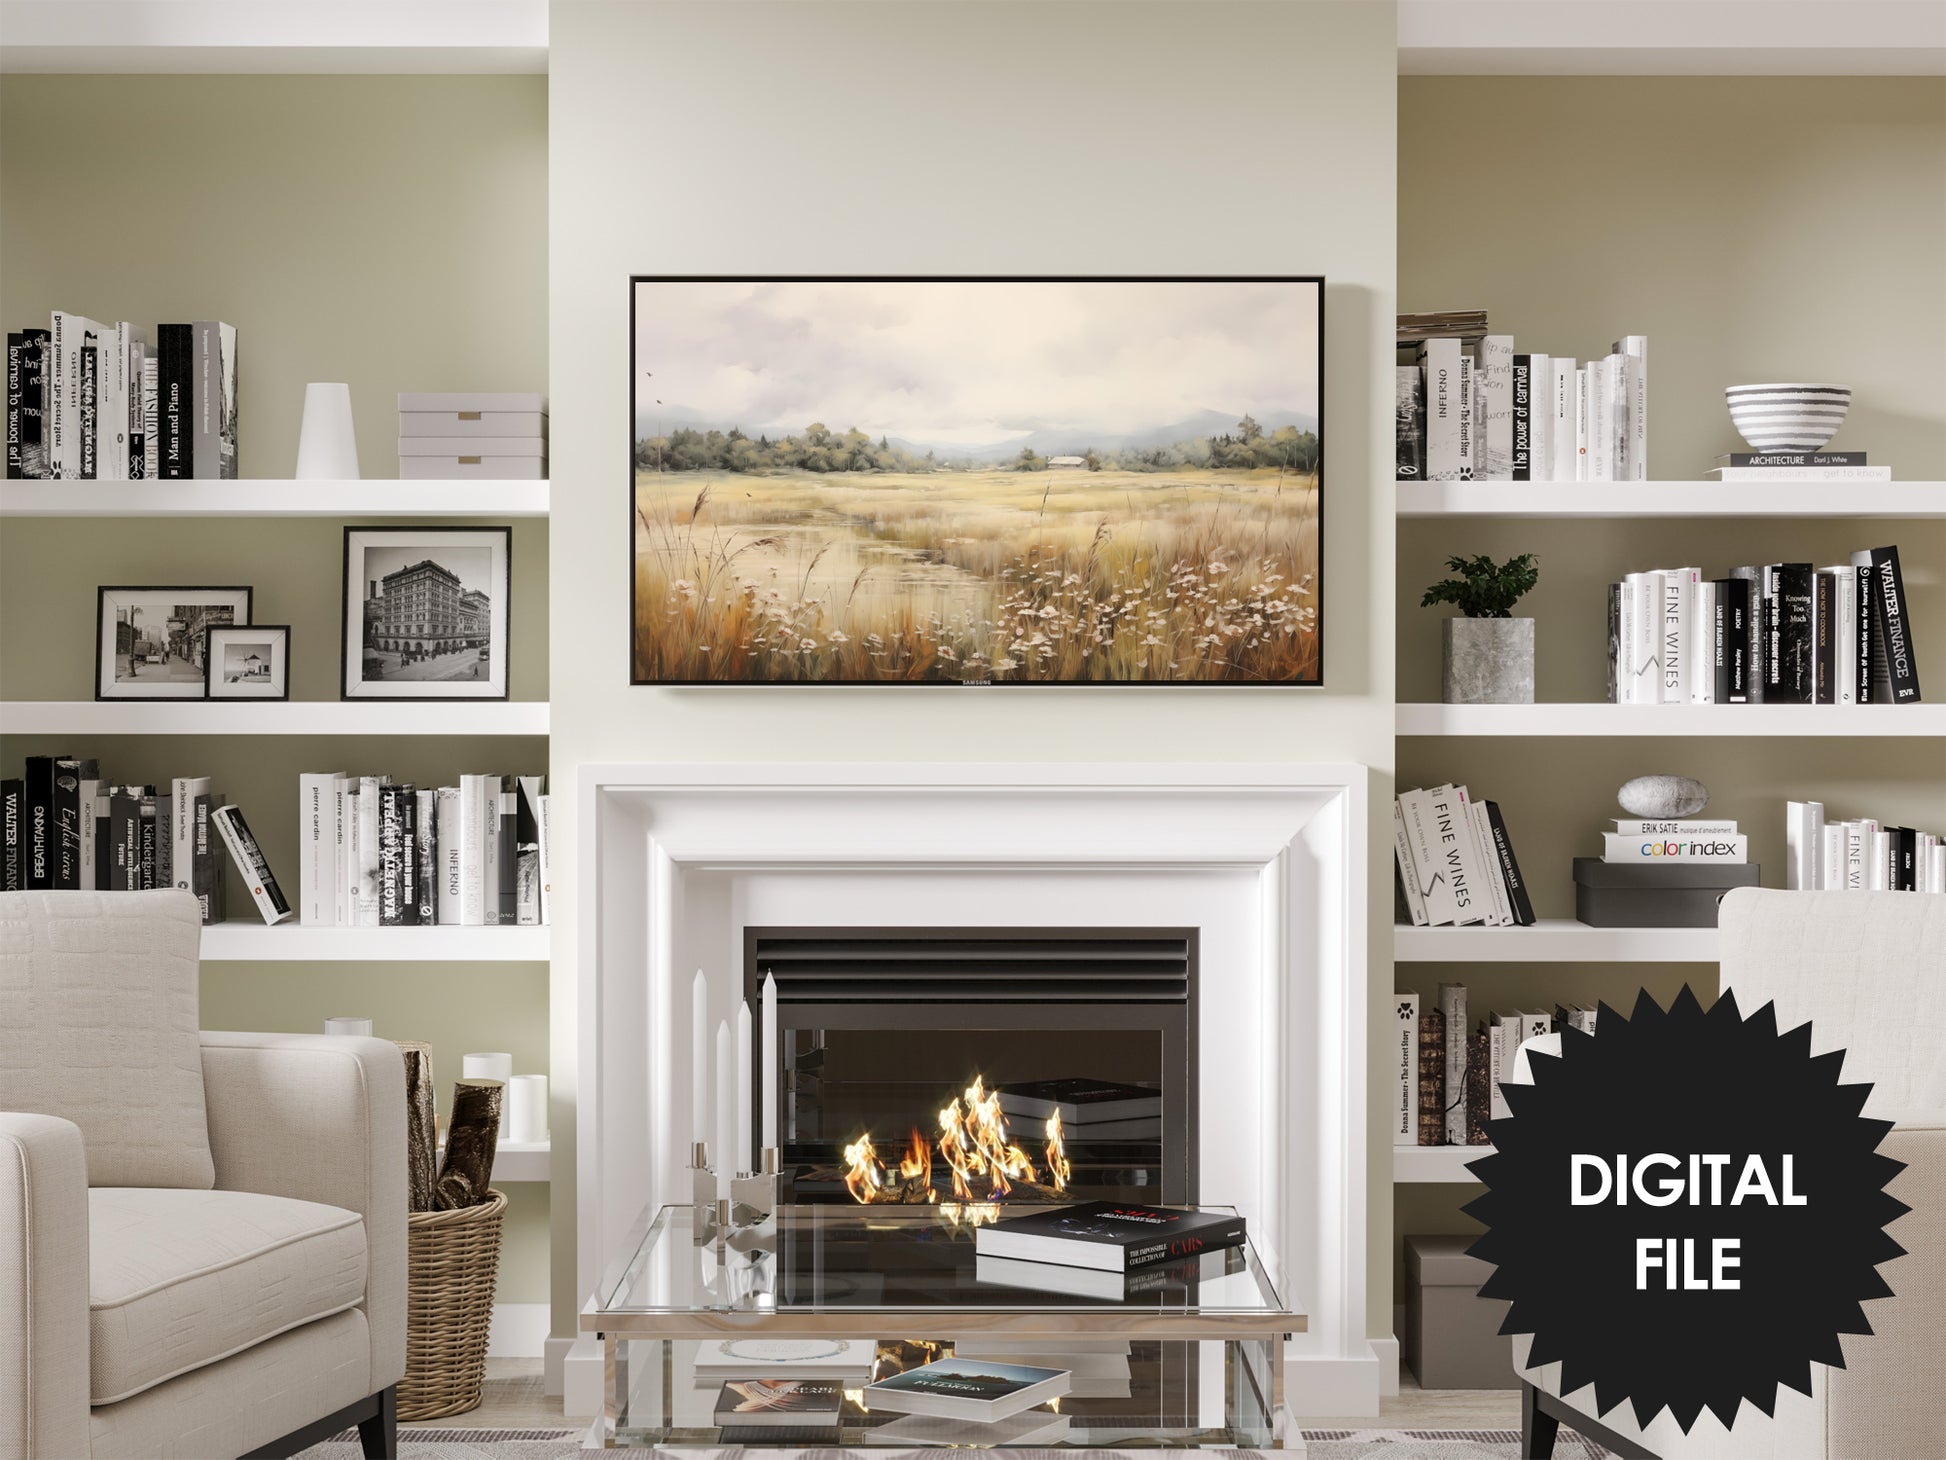 Samsung Frame TV Art Wildflower Meadow, Spring or Summer Floral Art preview in modern living room